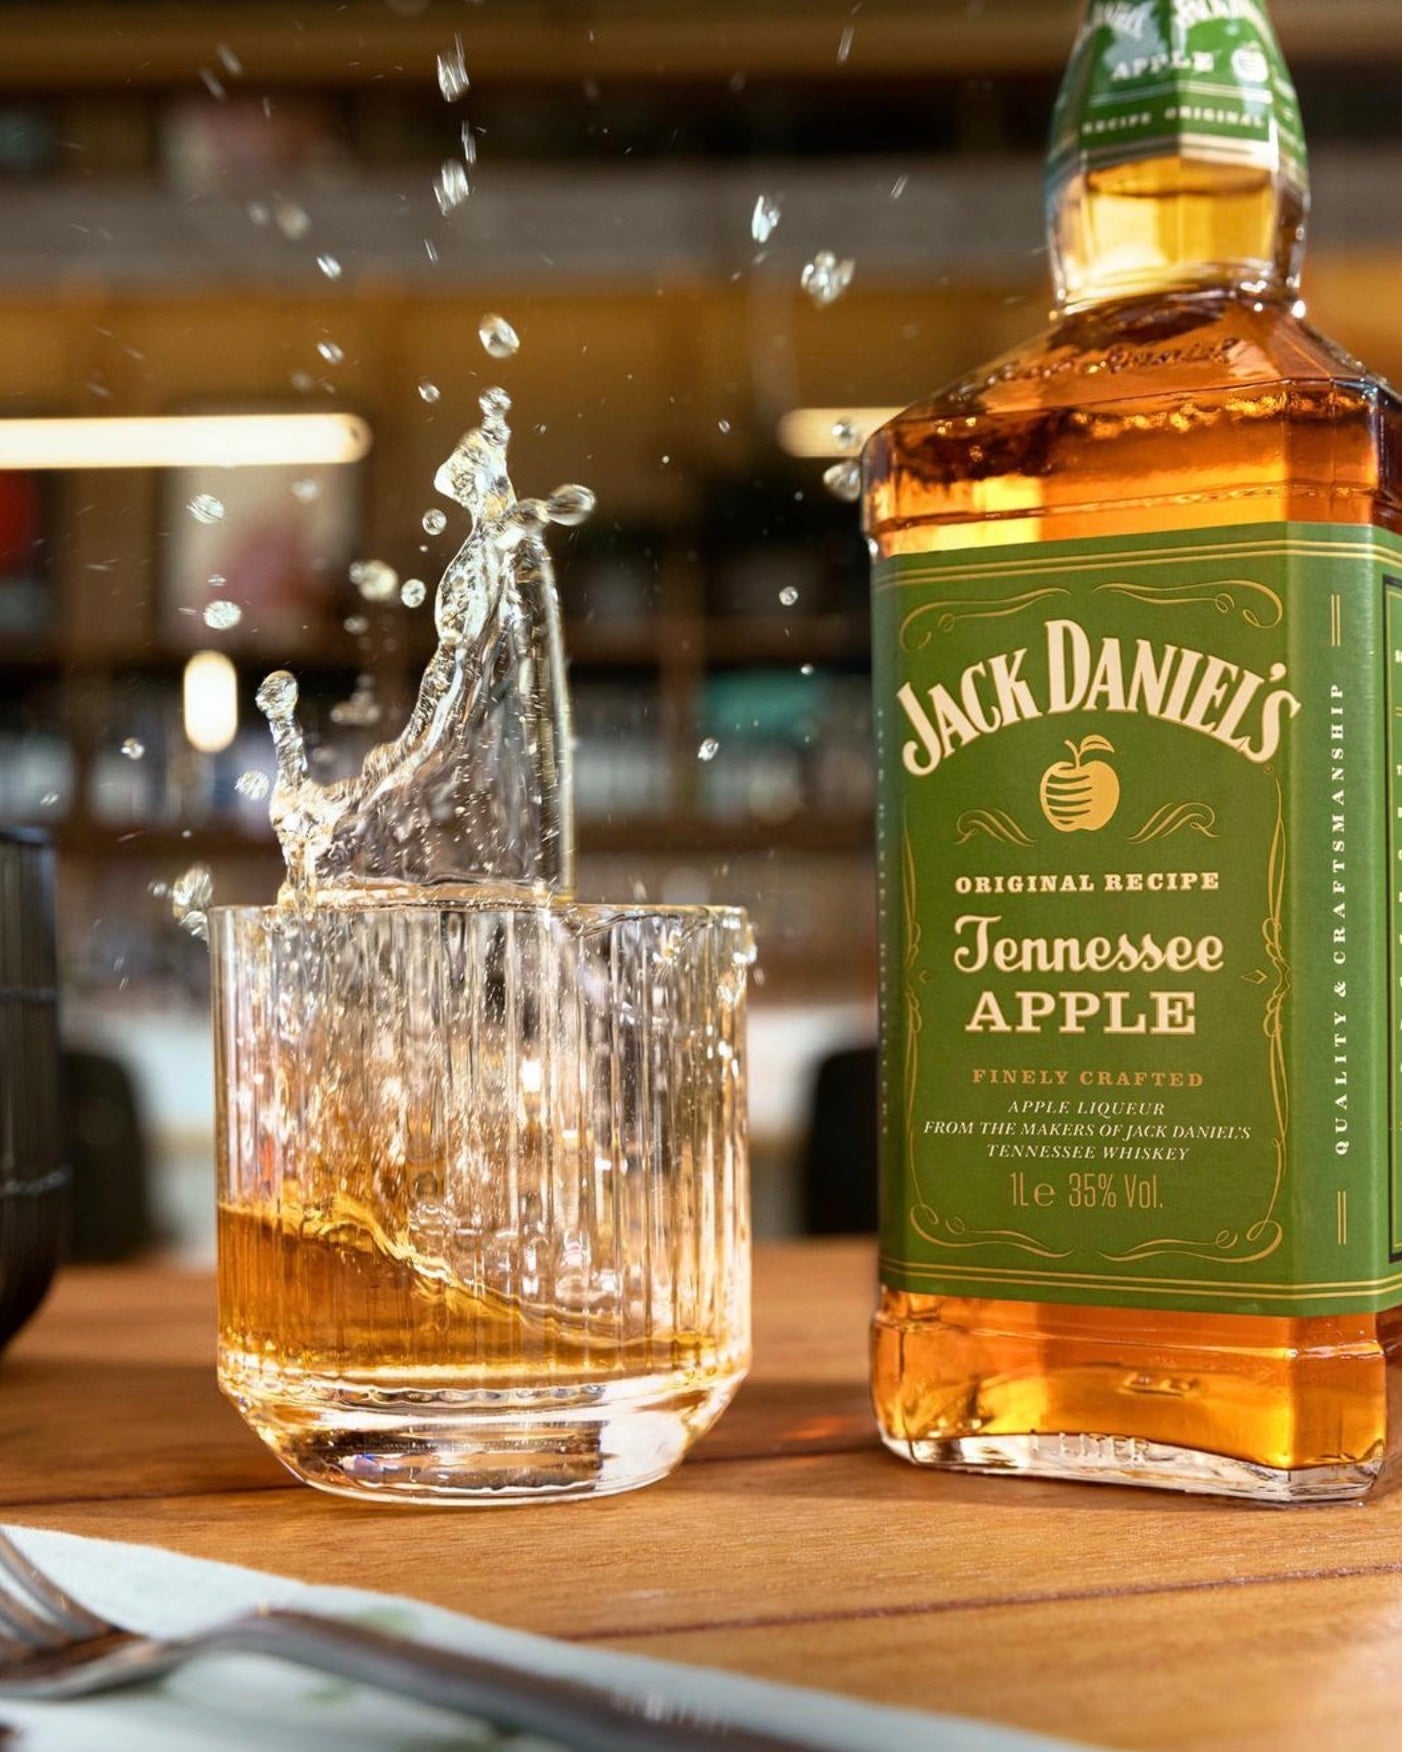 Jack Daniel's Apple - Tennessee Whiskey